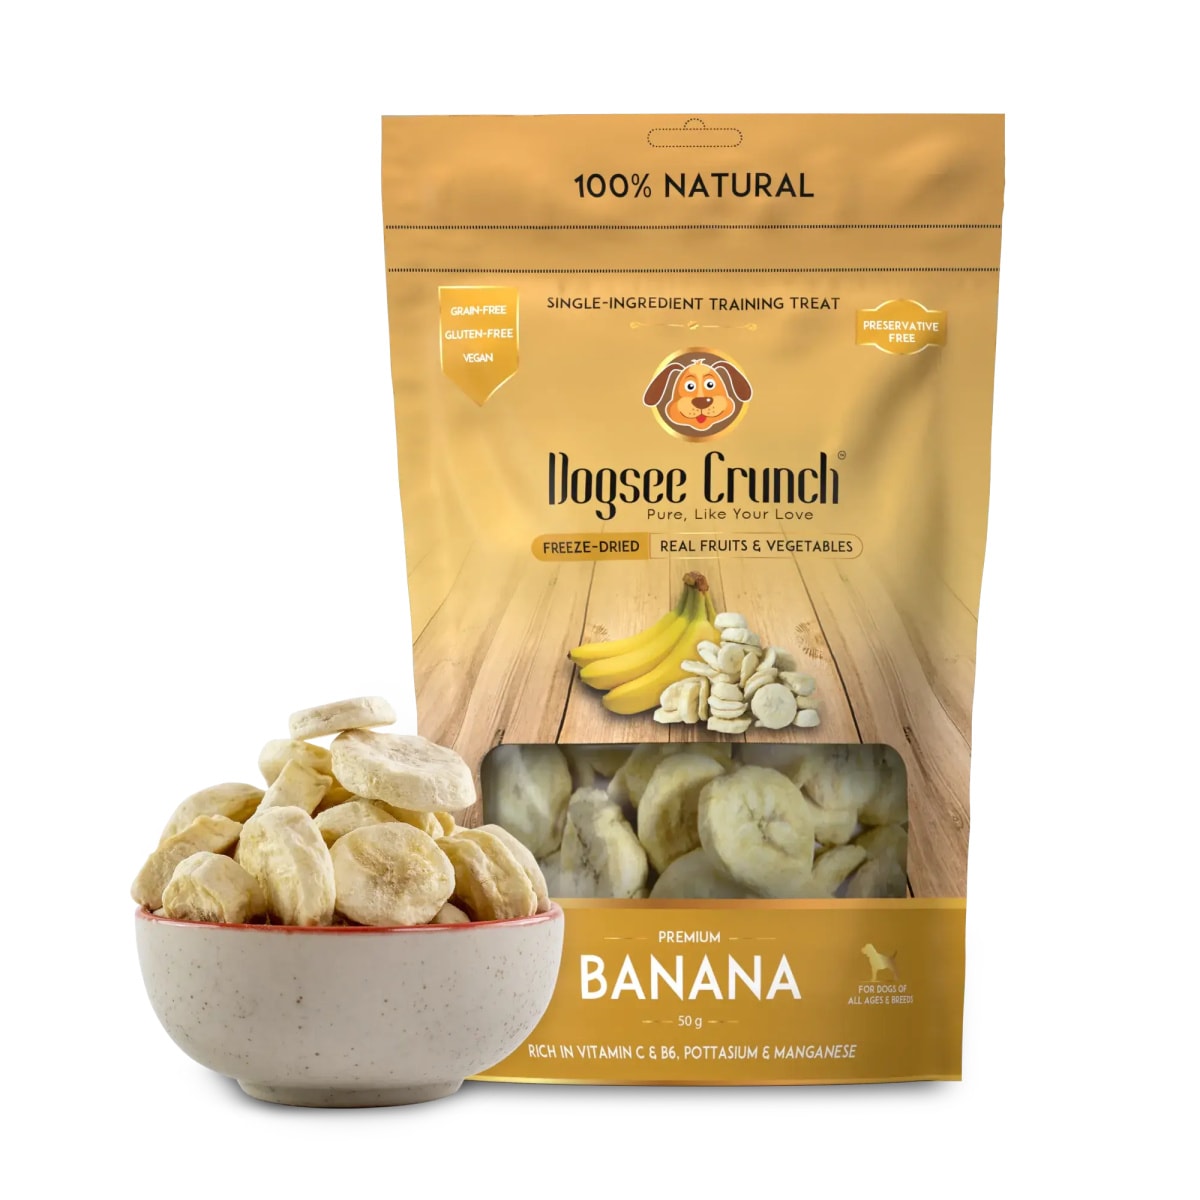 Dogsee Crunch Treats - Banana 15g Main Image